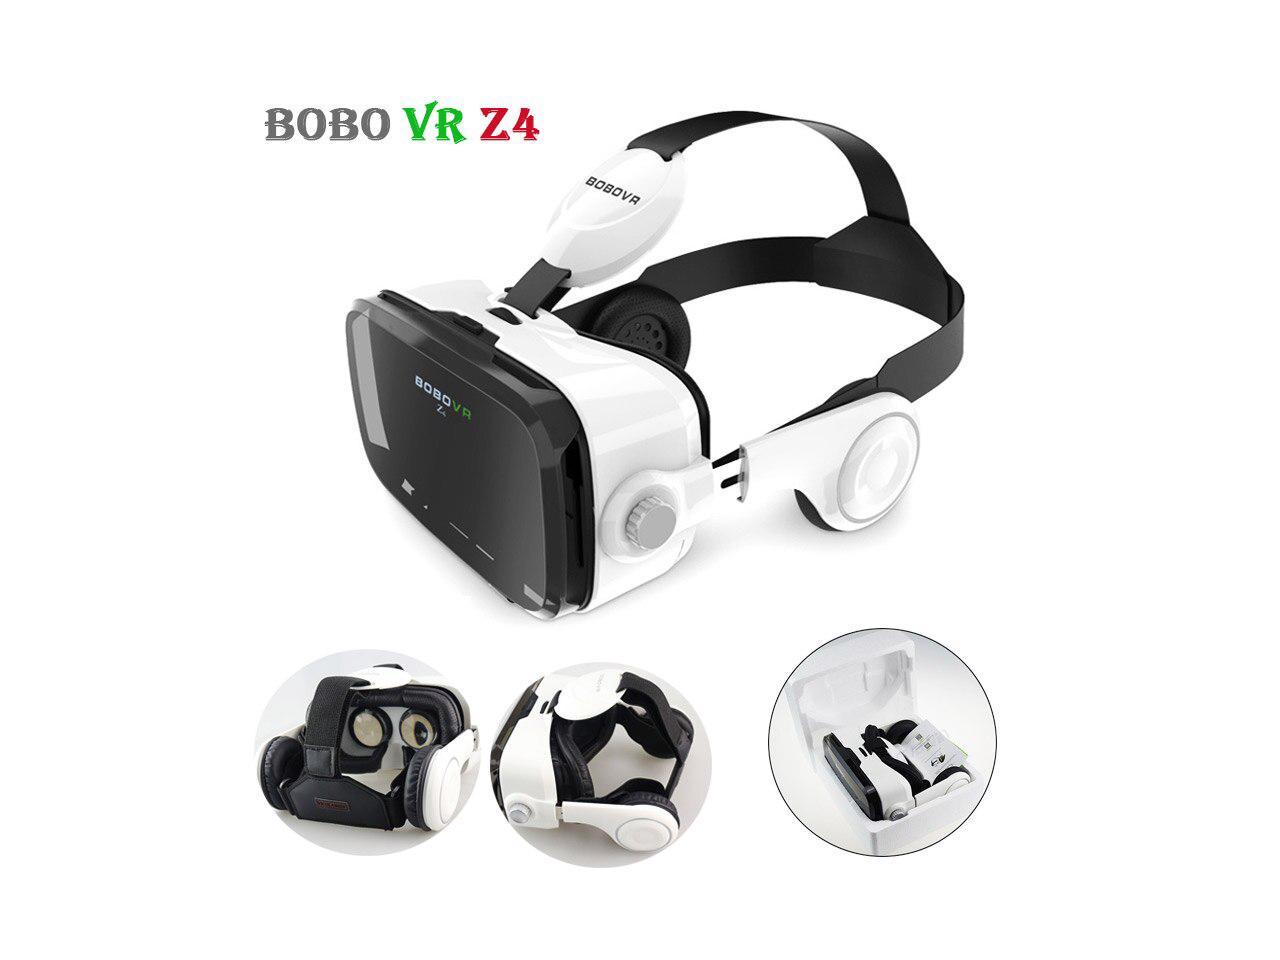 HISPETECH Original BOBOVR Z4 VR Headset Leather 3D Helmet Virtual Reality VR Glasses Headset Stereo Box BOBO VR for Android IOS Smartphone 4-6'